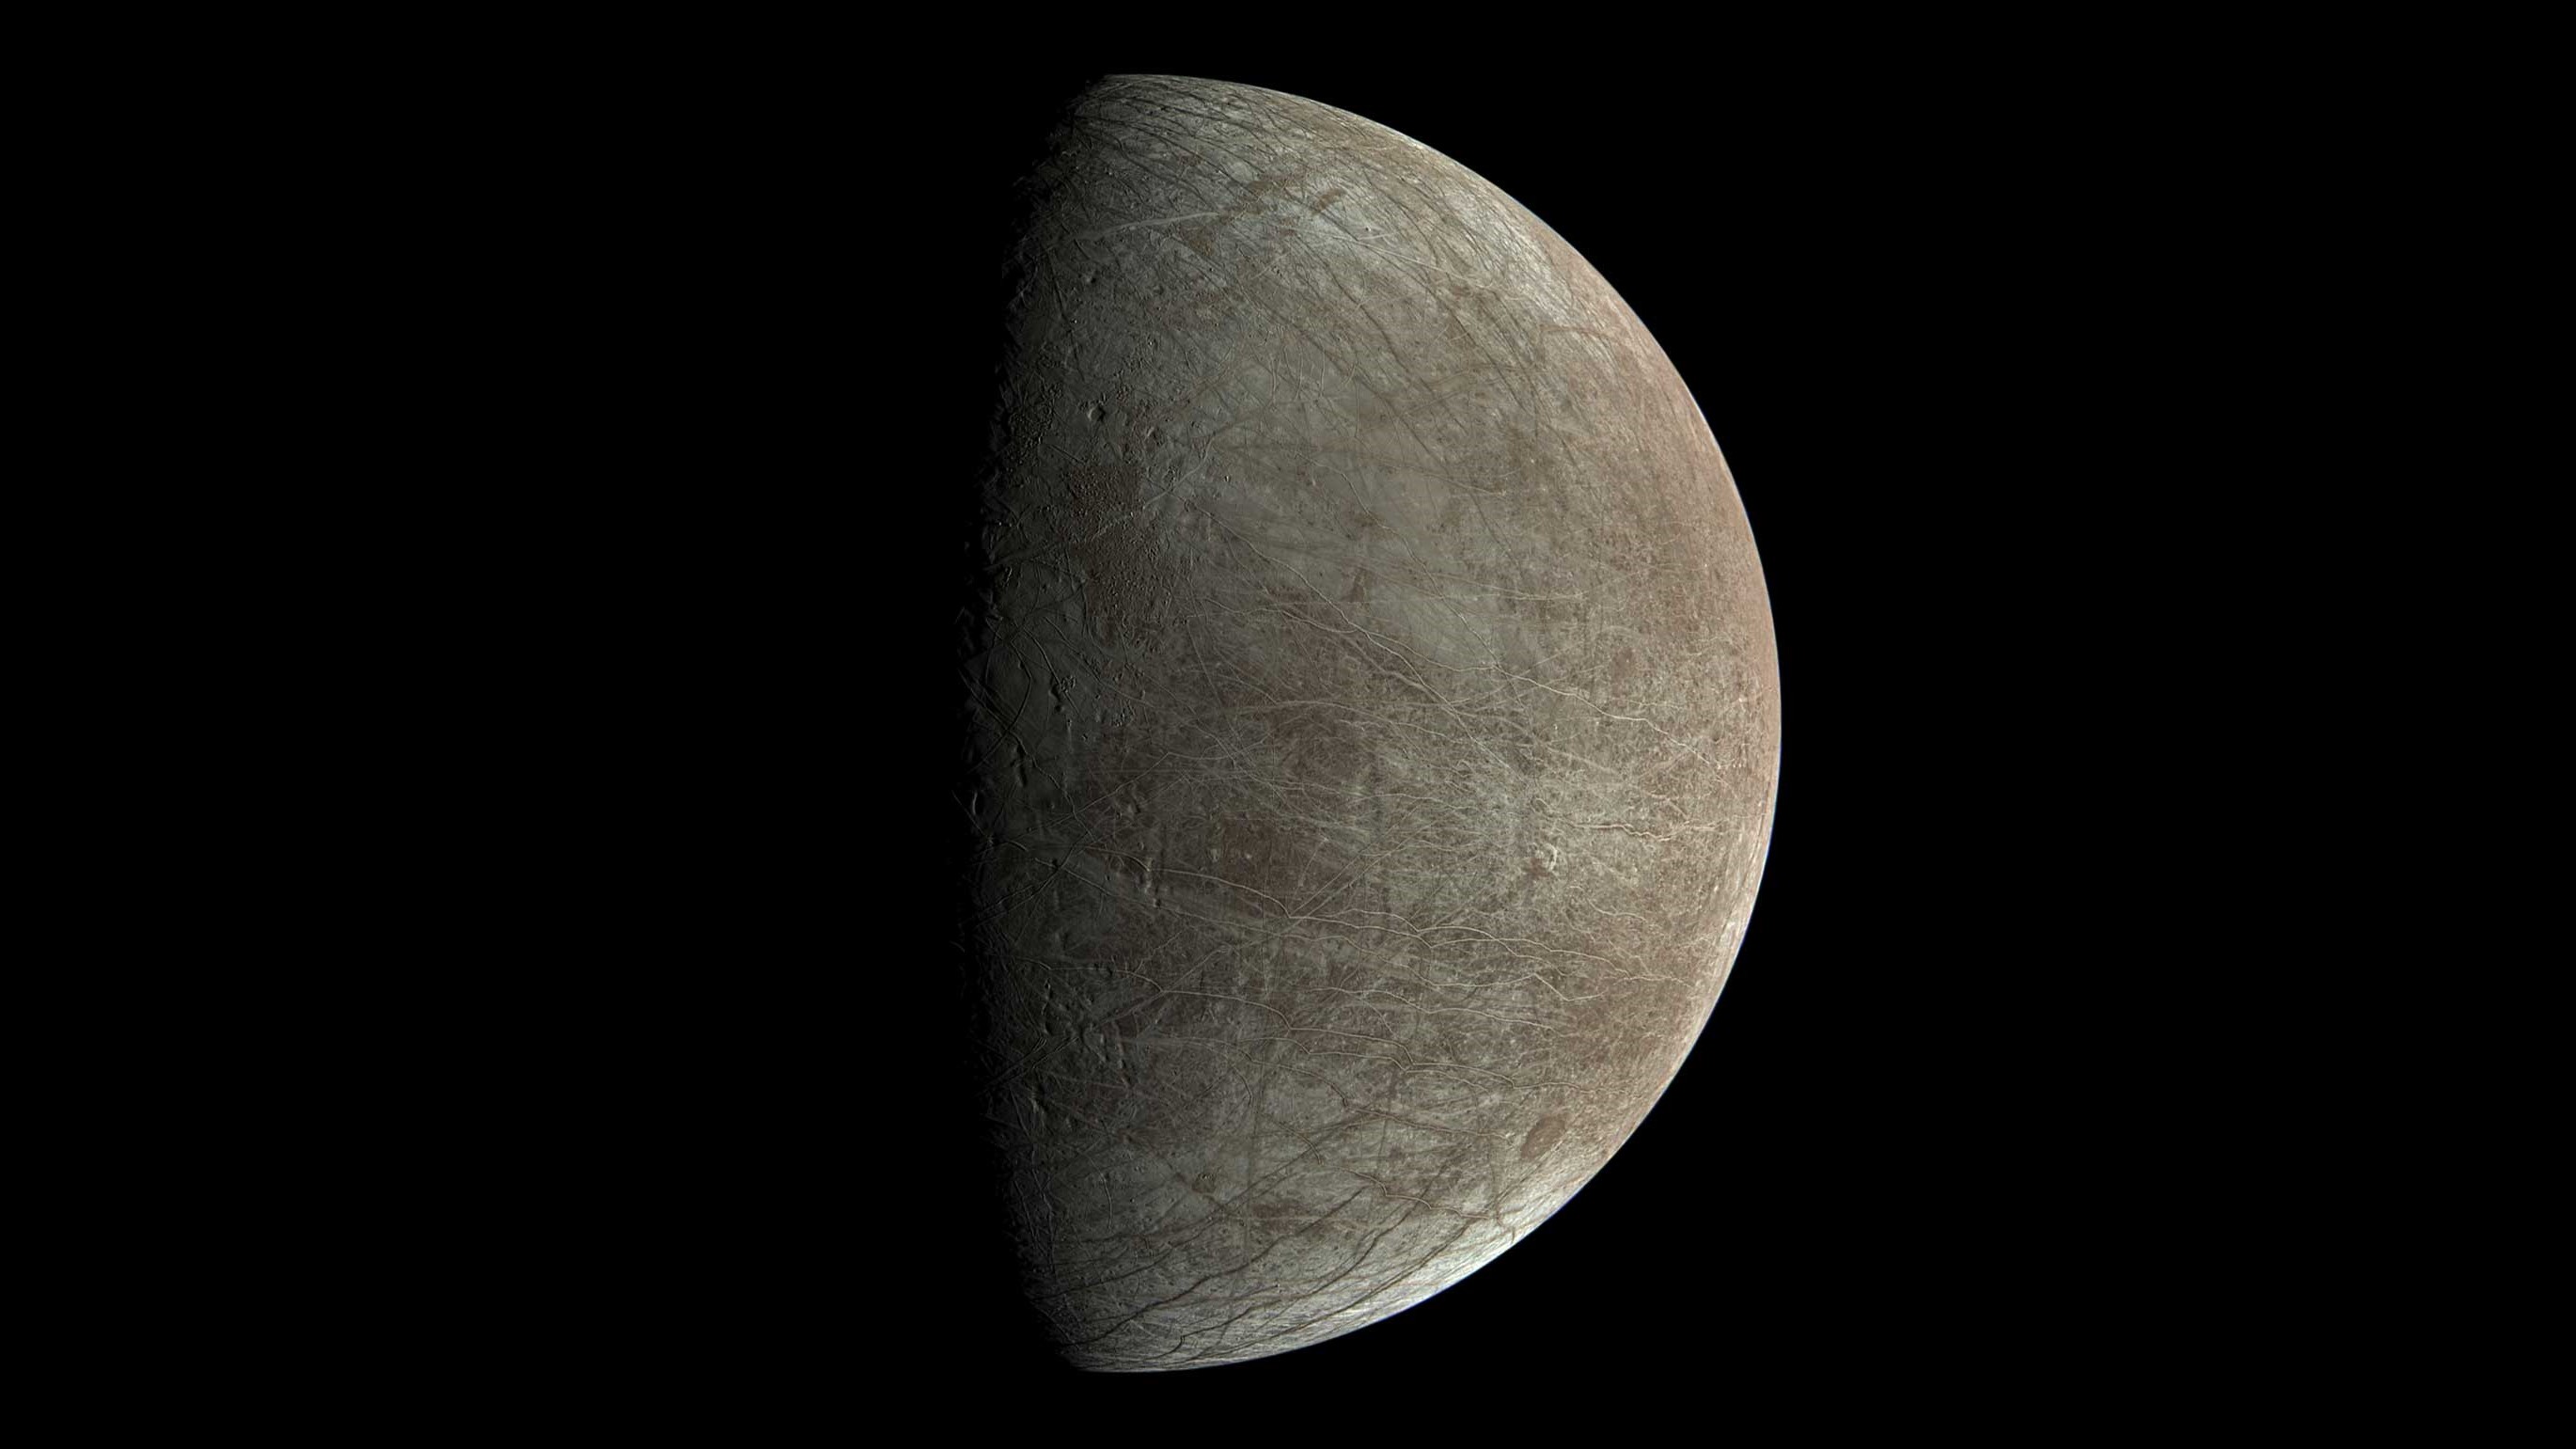 Jupiter moons take center stage in bonus science from NASA's Juno spacecraft